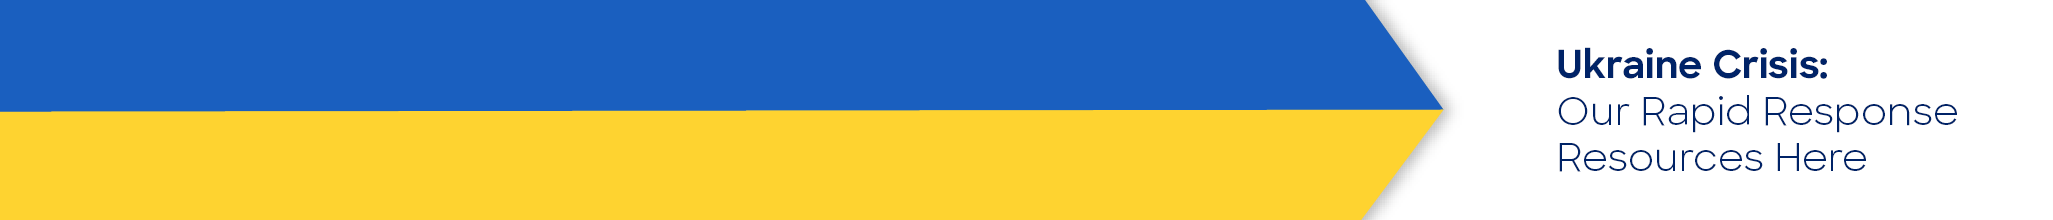 Ukraine Crisis Rapid Response Resources Web Banner